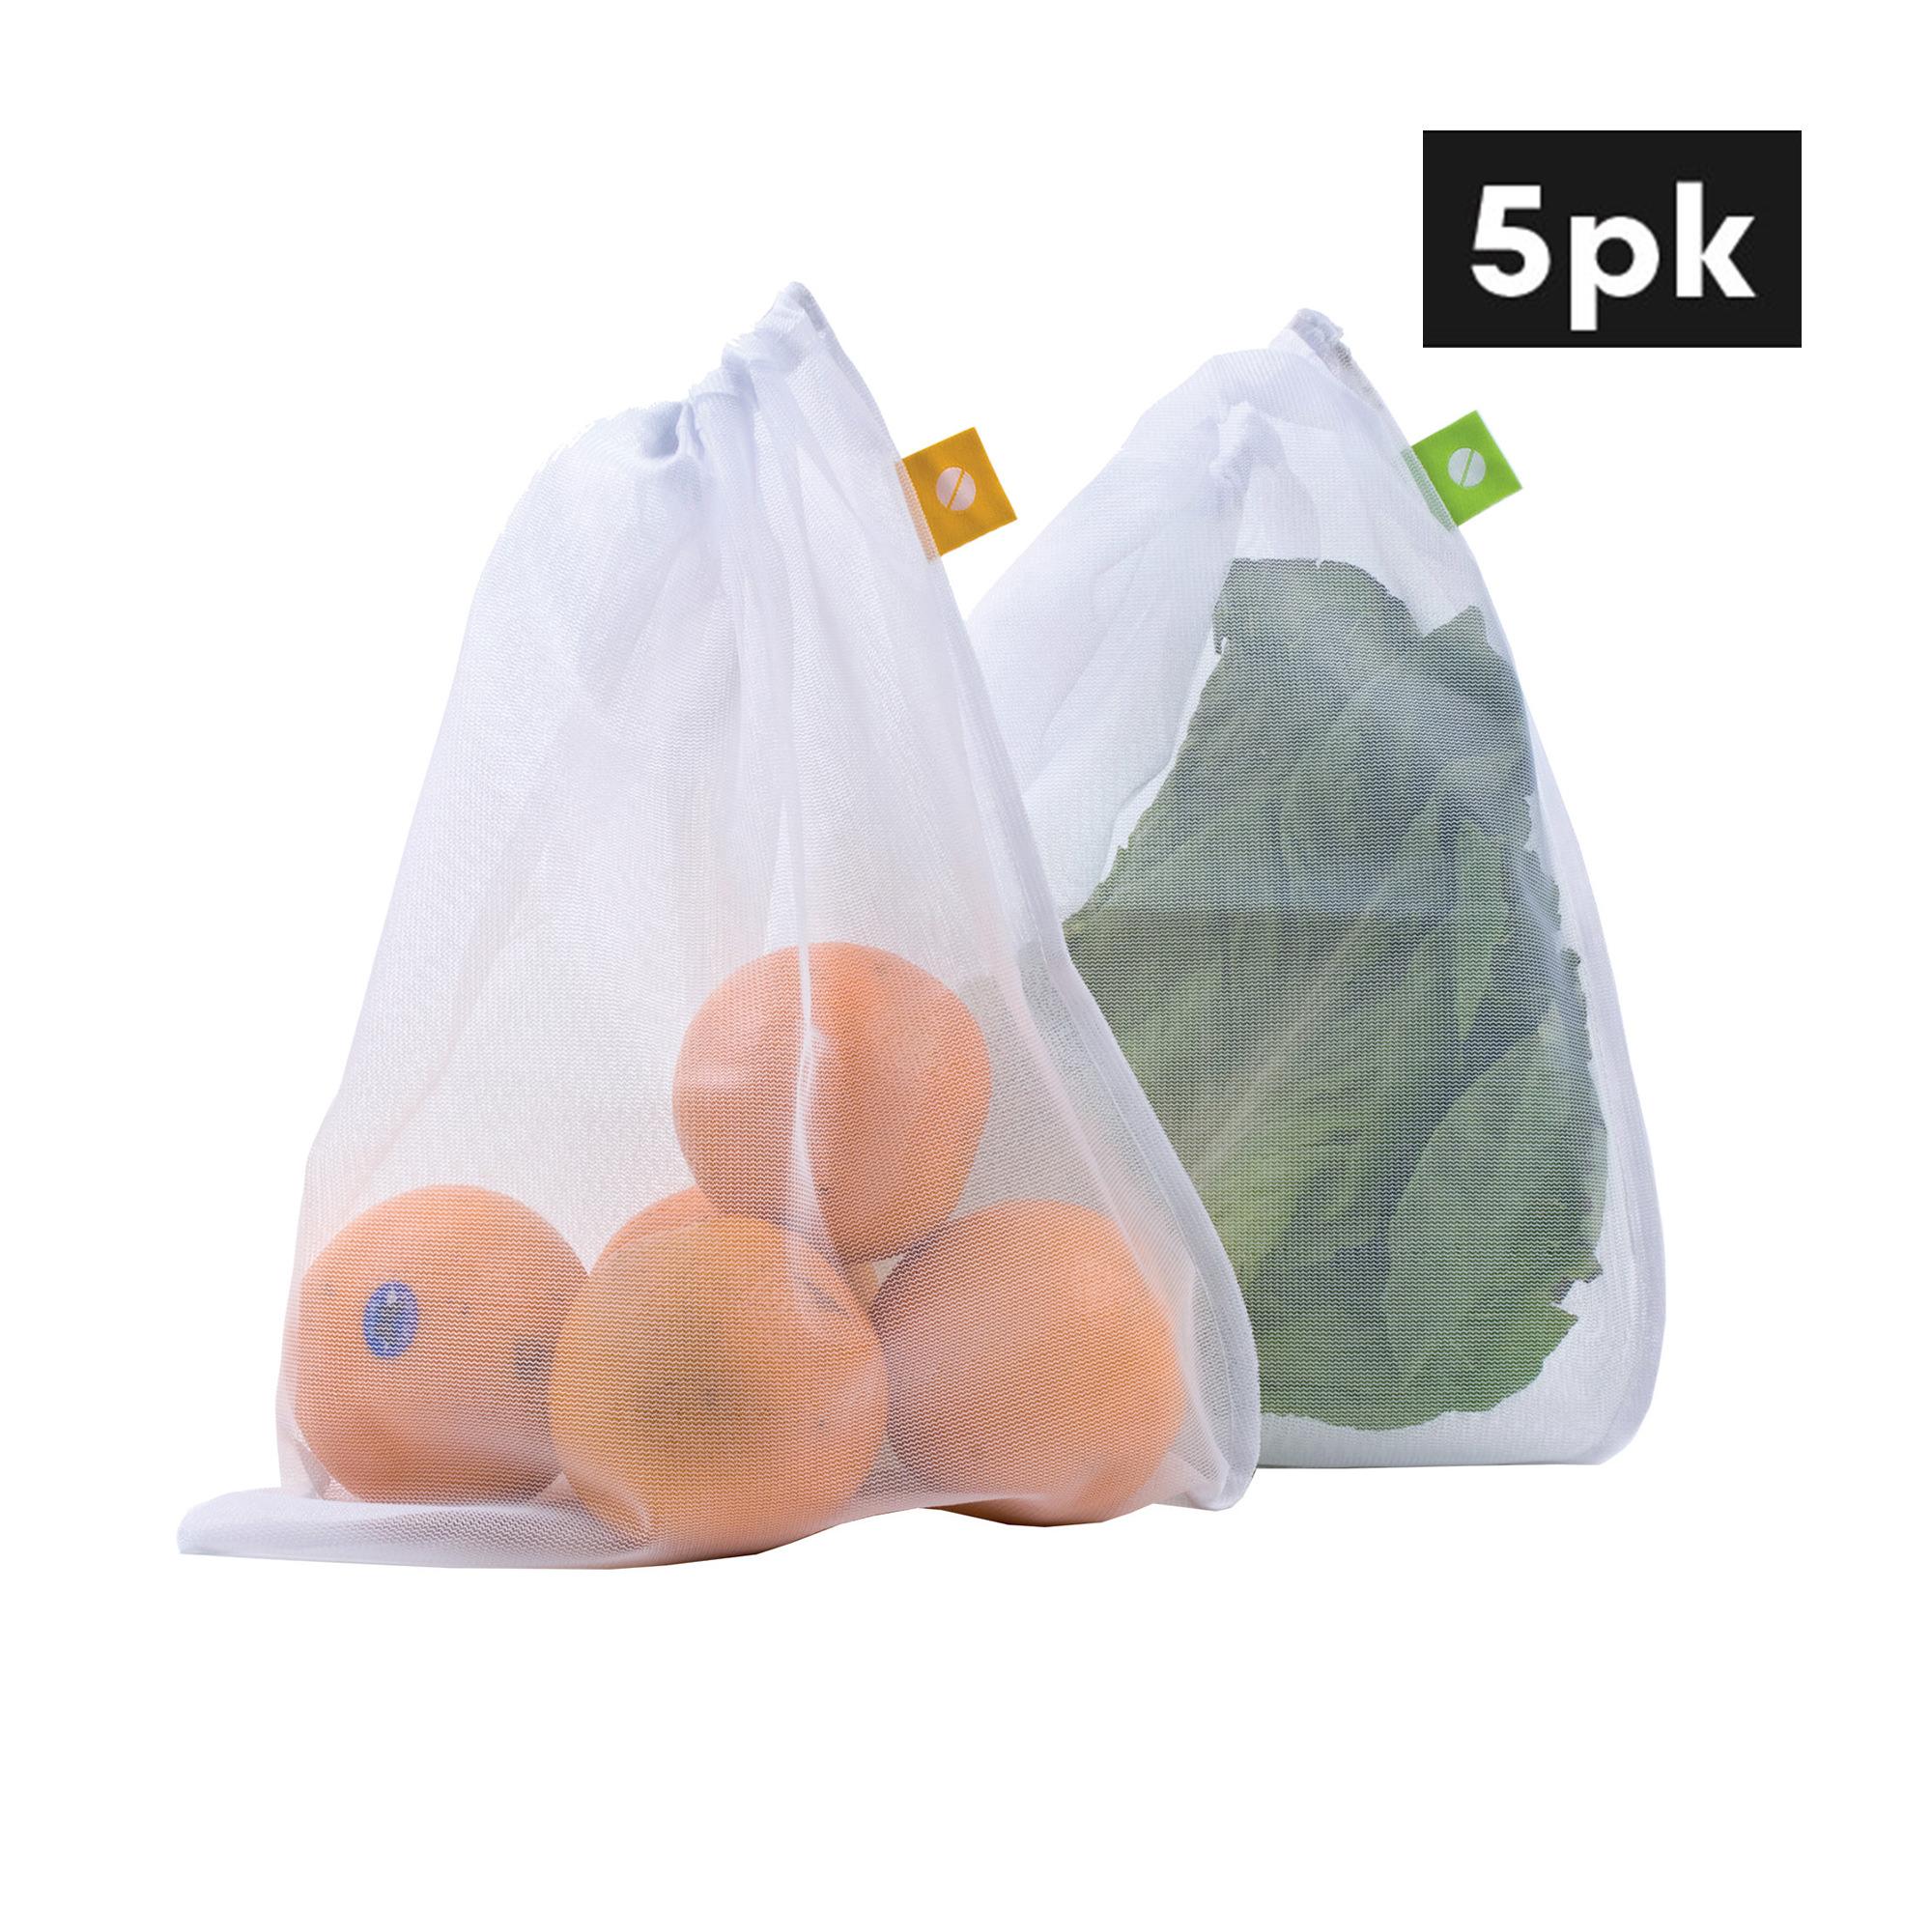 Appetito Reusable Produce Mesh Bag 5pk Image 1